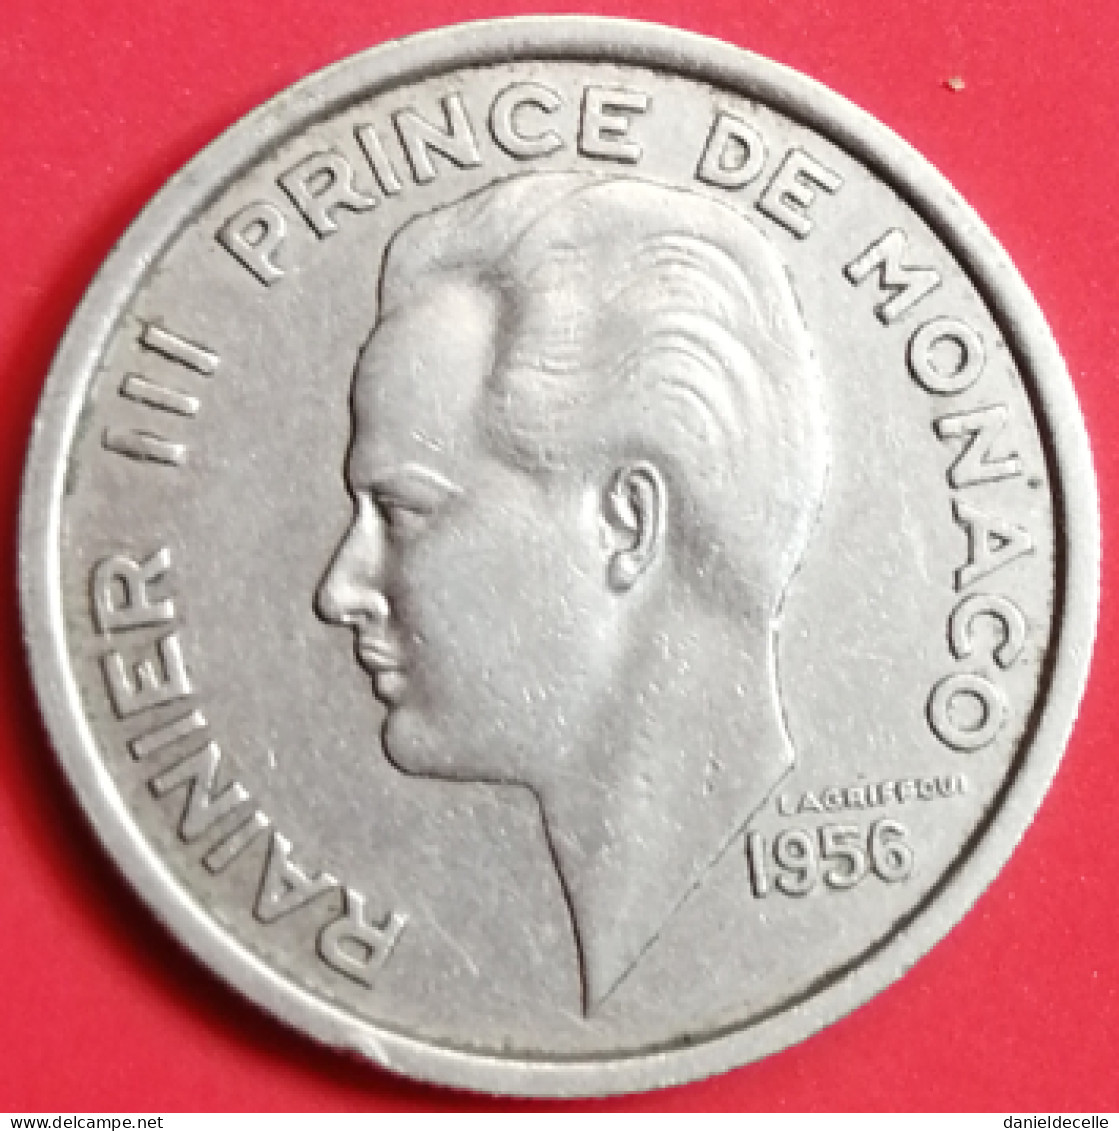 100 Francs 1956 Monaco - 1949-1956 Old Francs